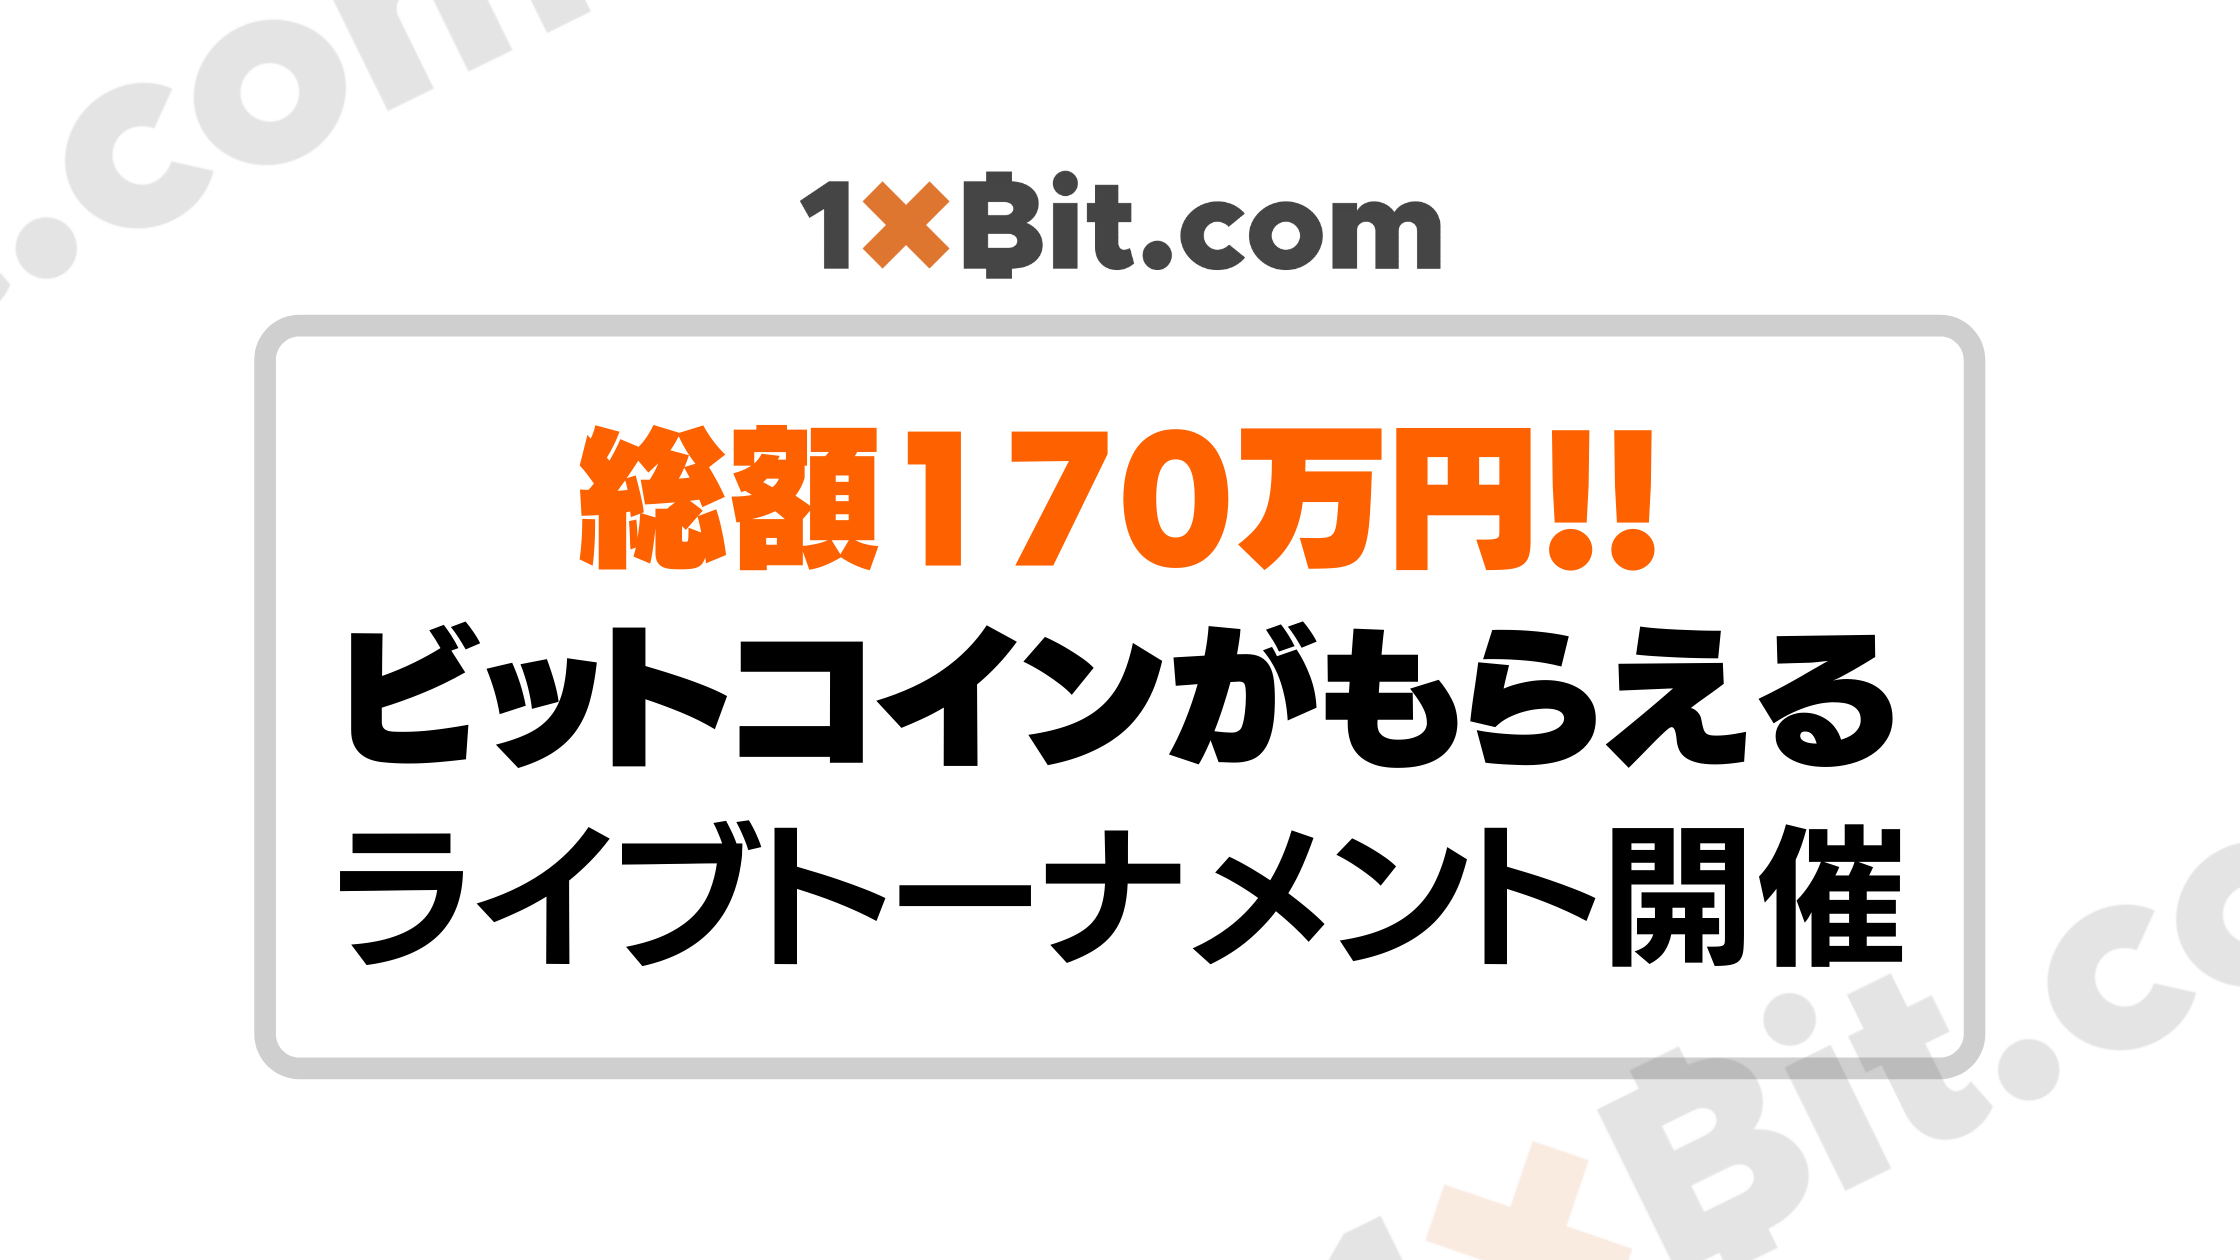 【1xBit】総額170万円！ビットコインがもらえるライブカジノイベント開催♪